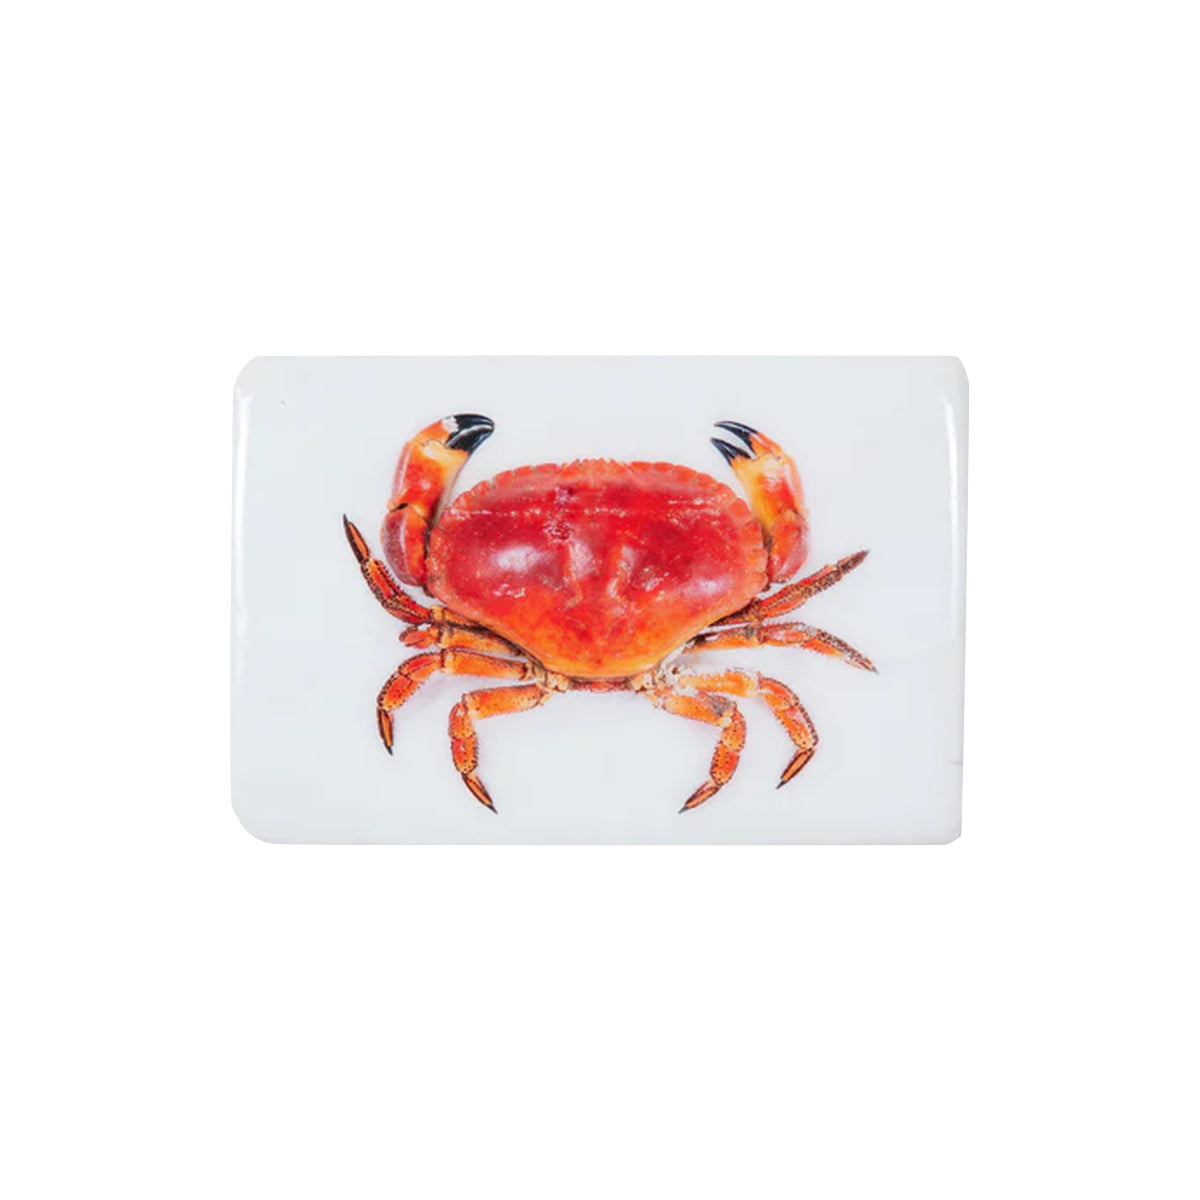 Porte-baguettes en céramique de crabe mignon, oreiller d